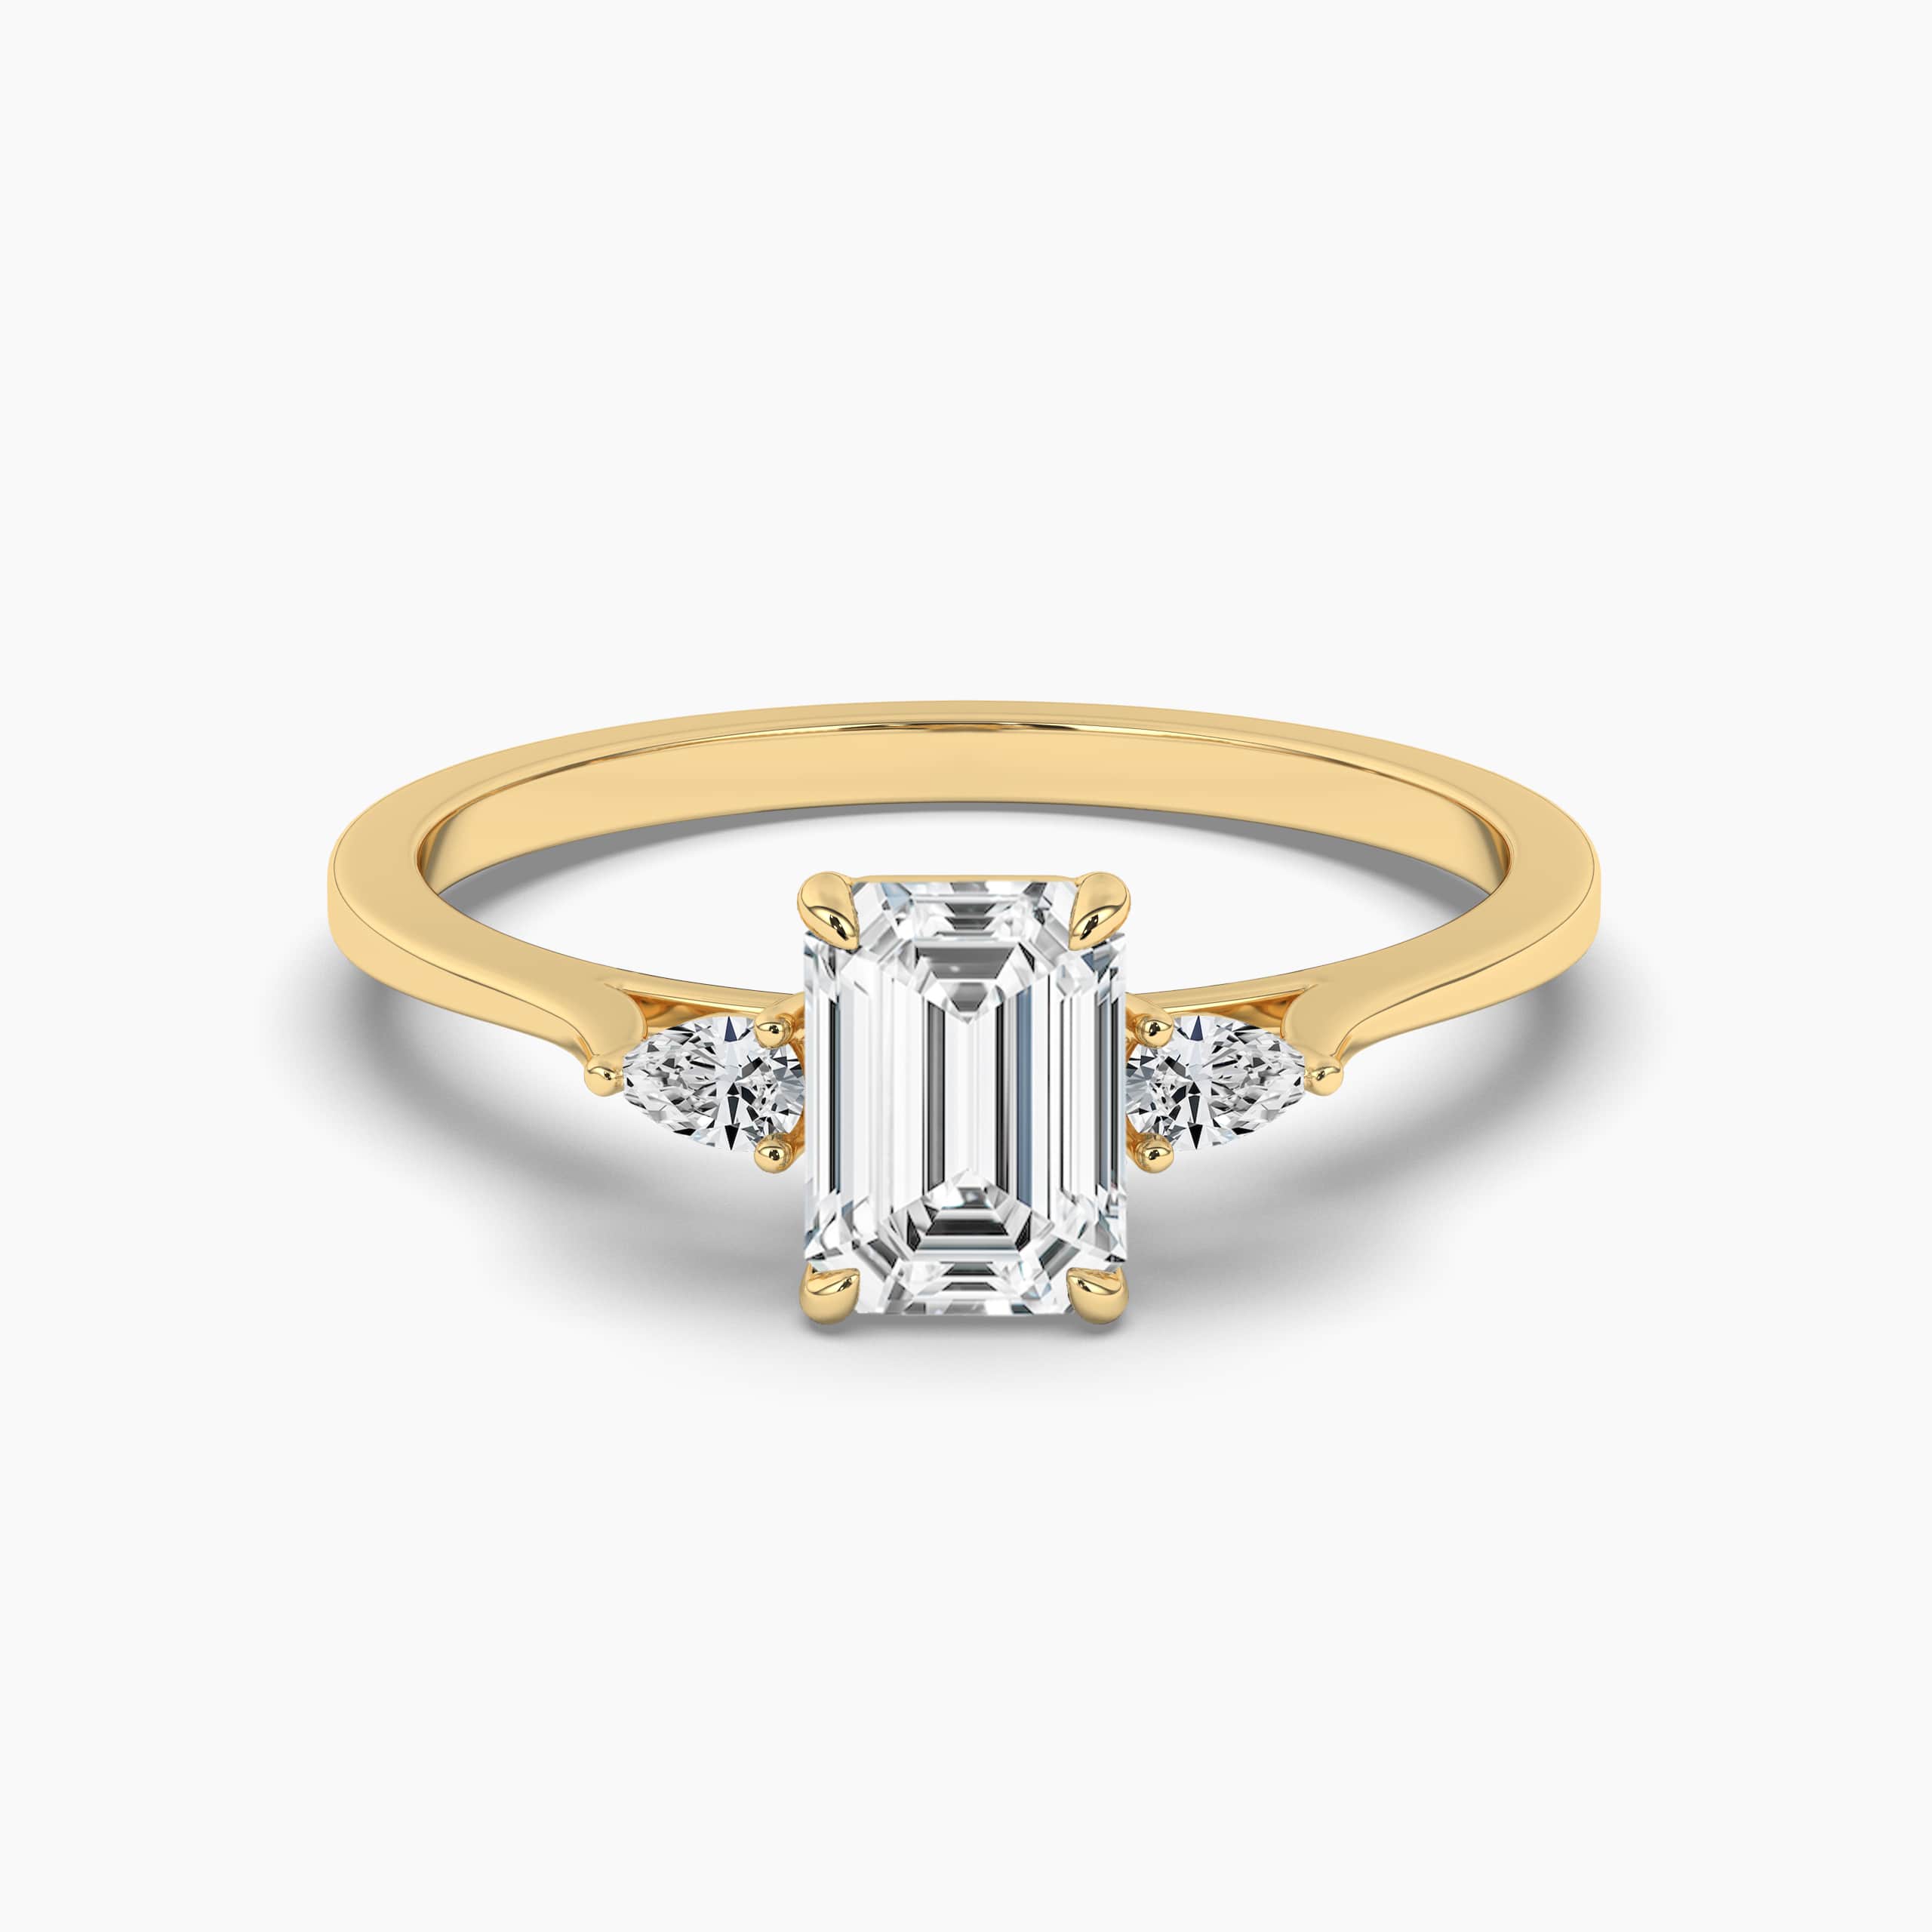 The Three Stone Emerald Engagement Ring